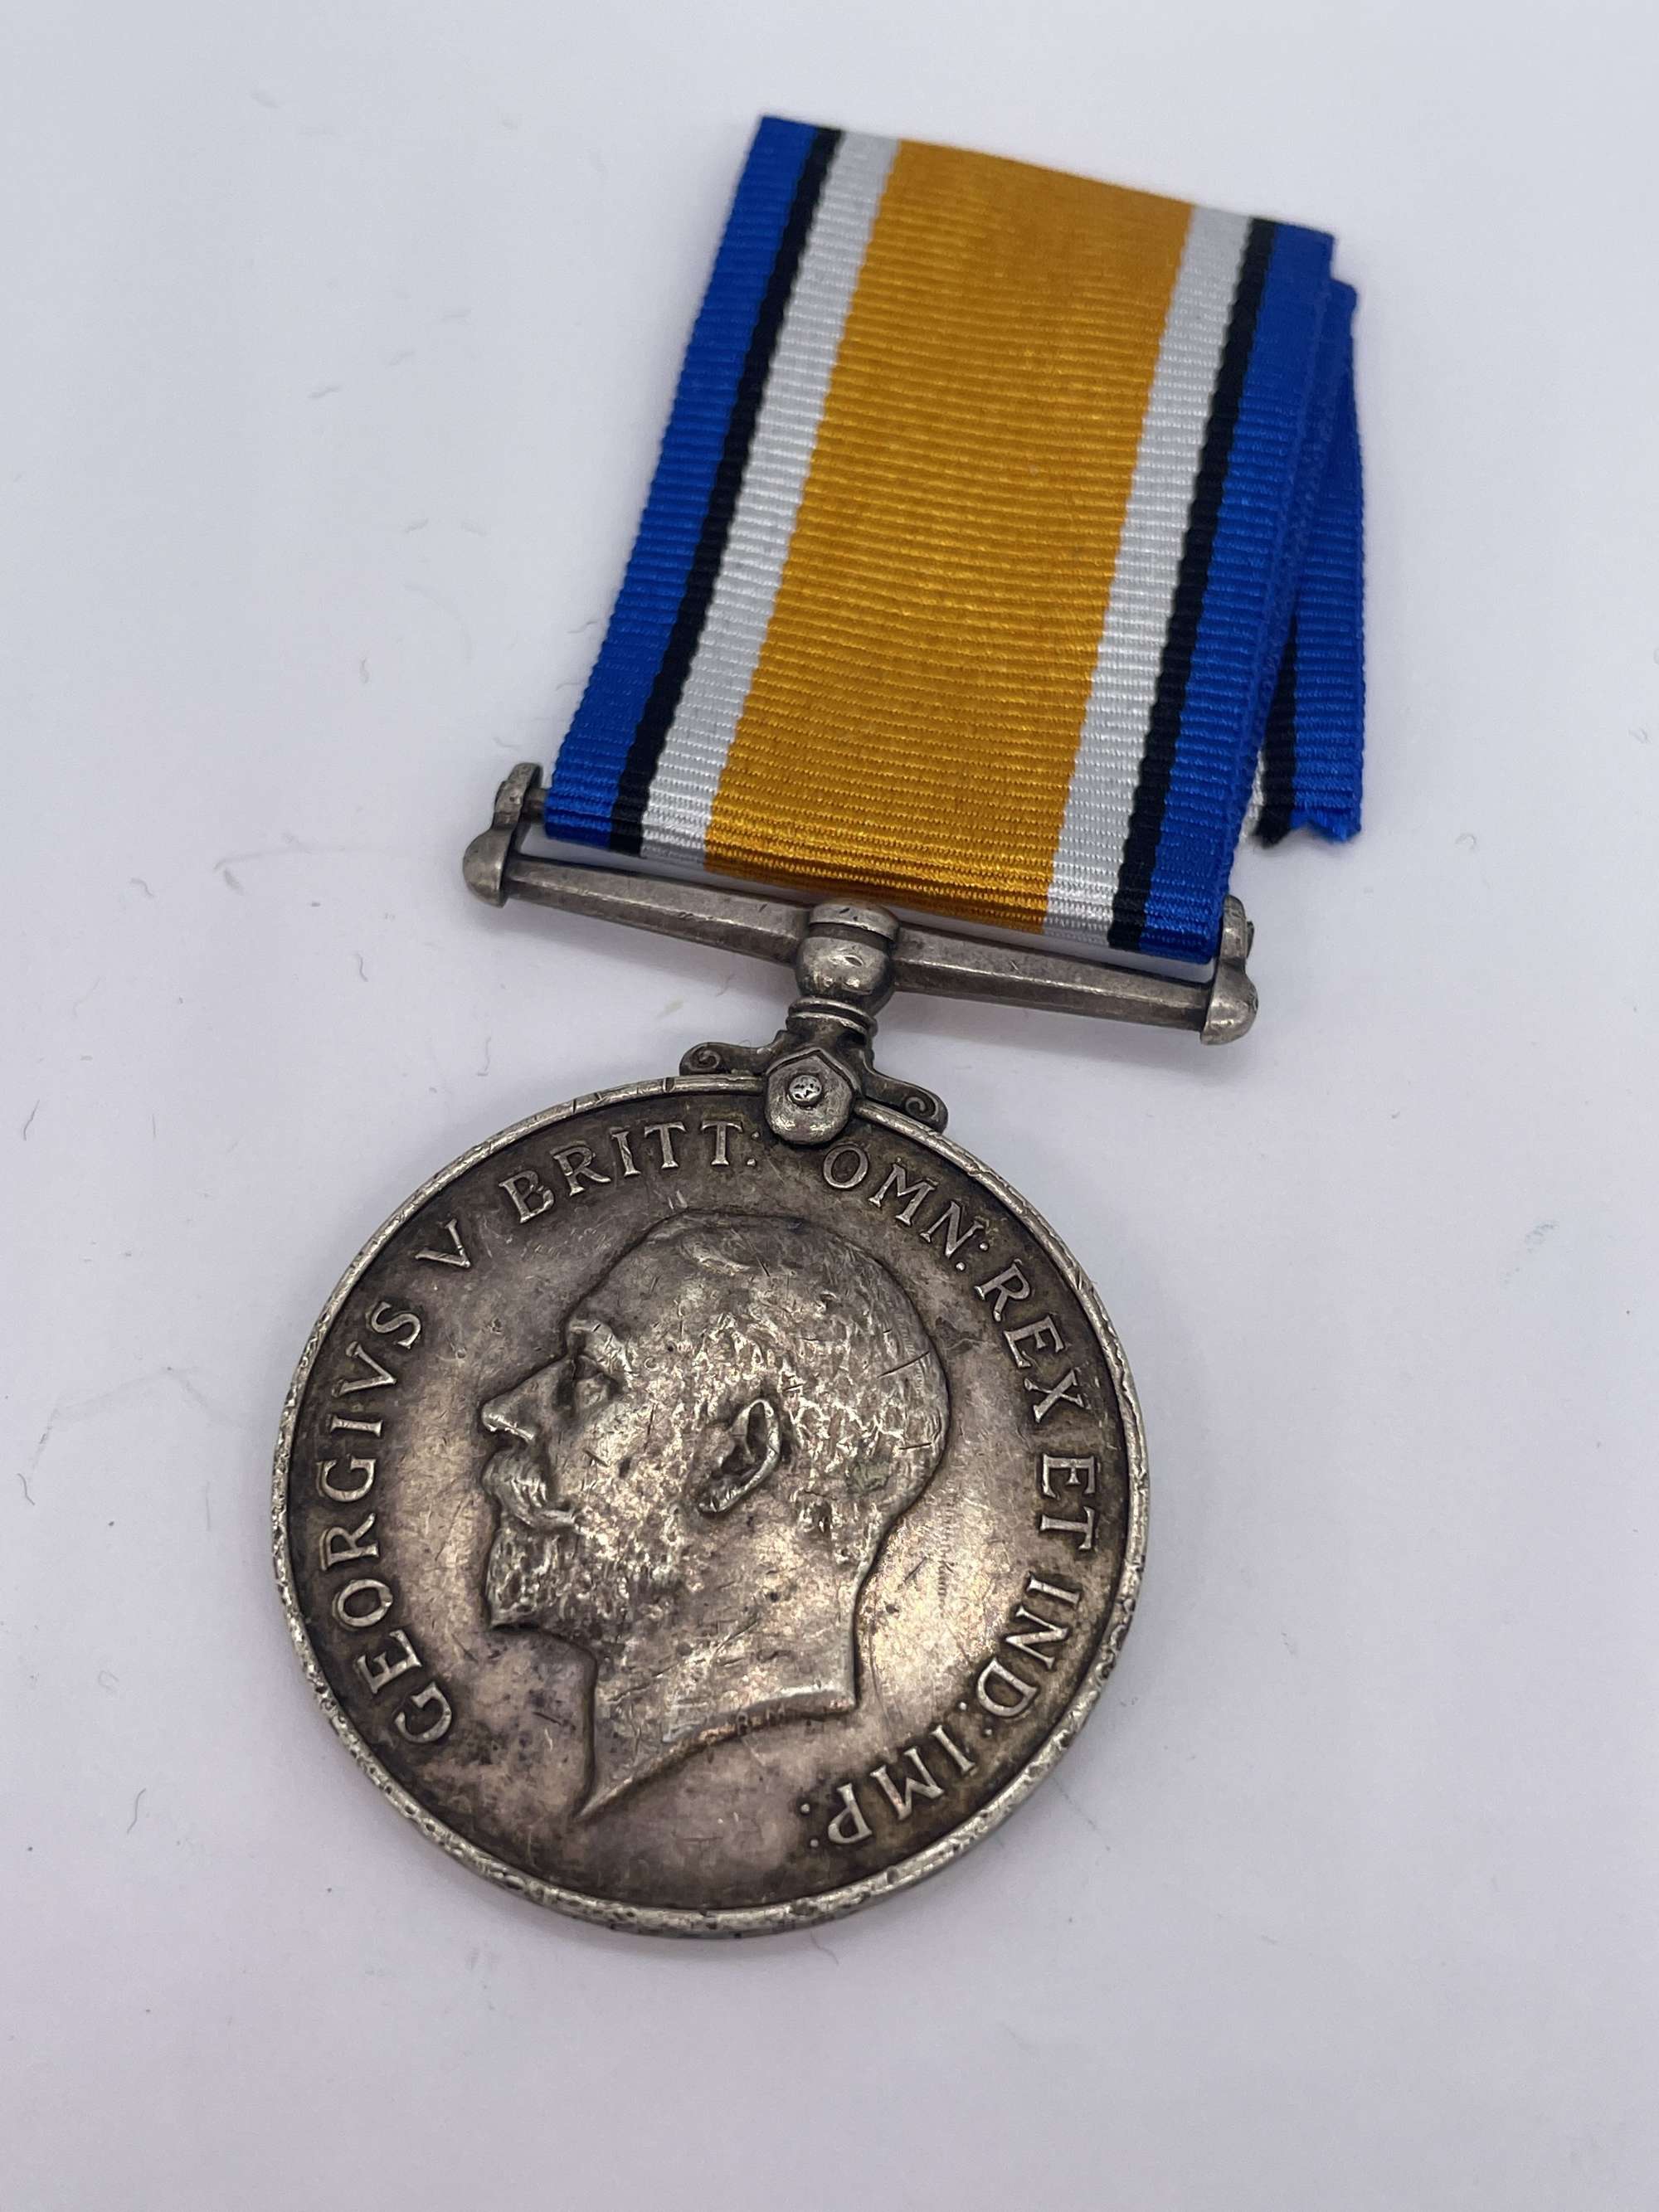 Original World War One British War Medal, Pte Chatterton, Royal Army Medical Corps